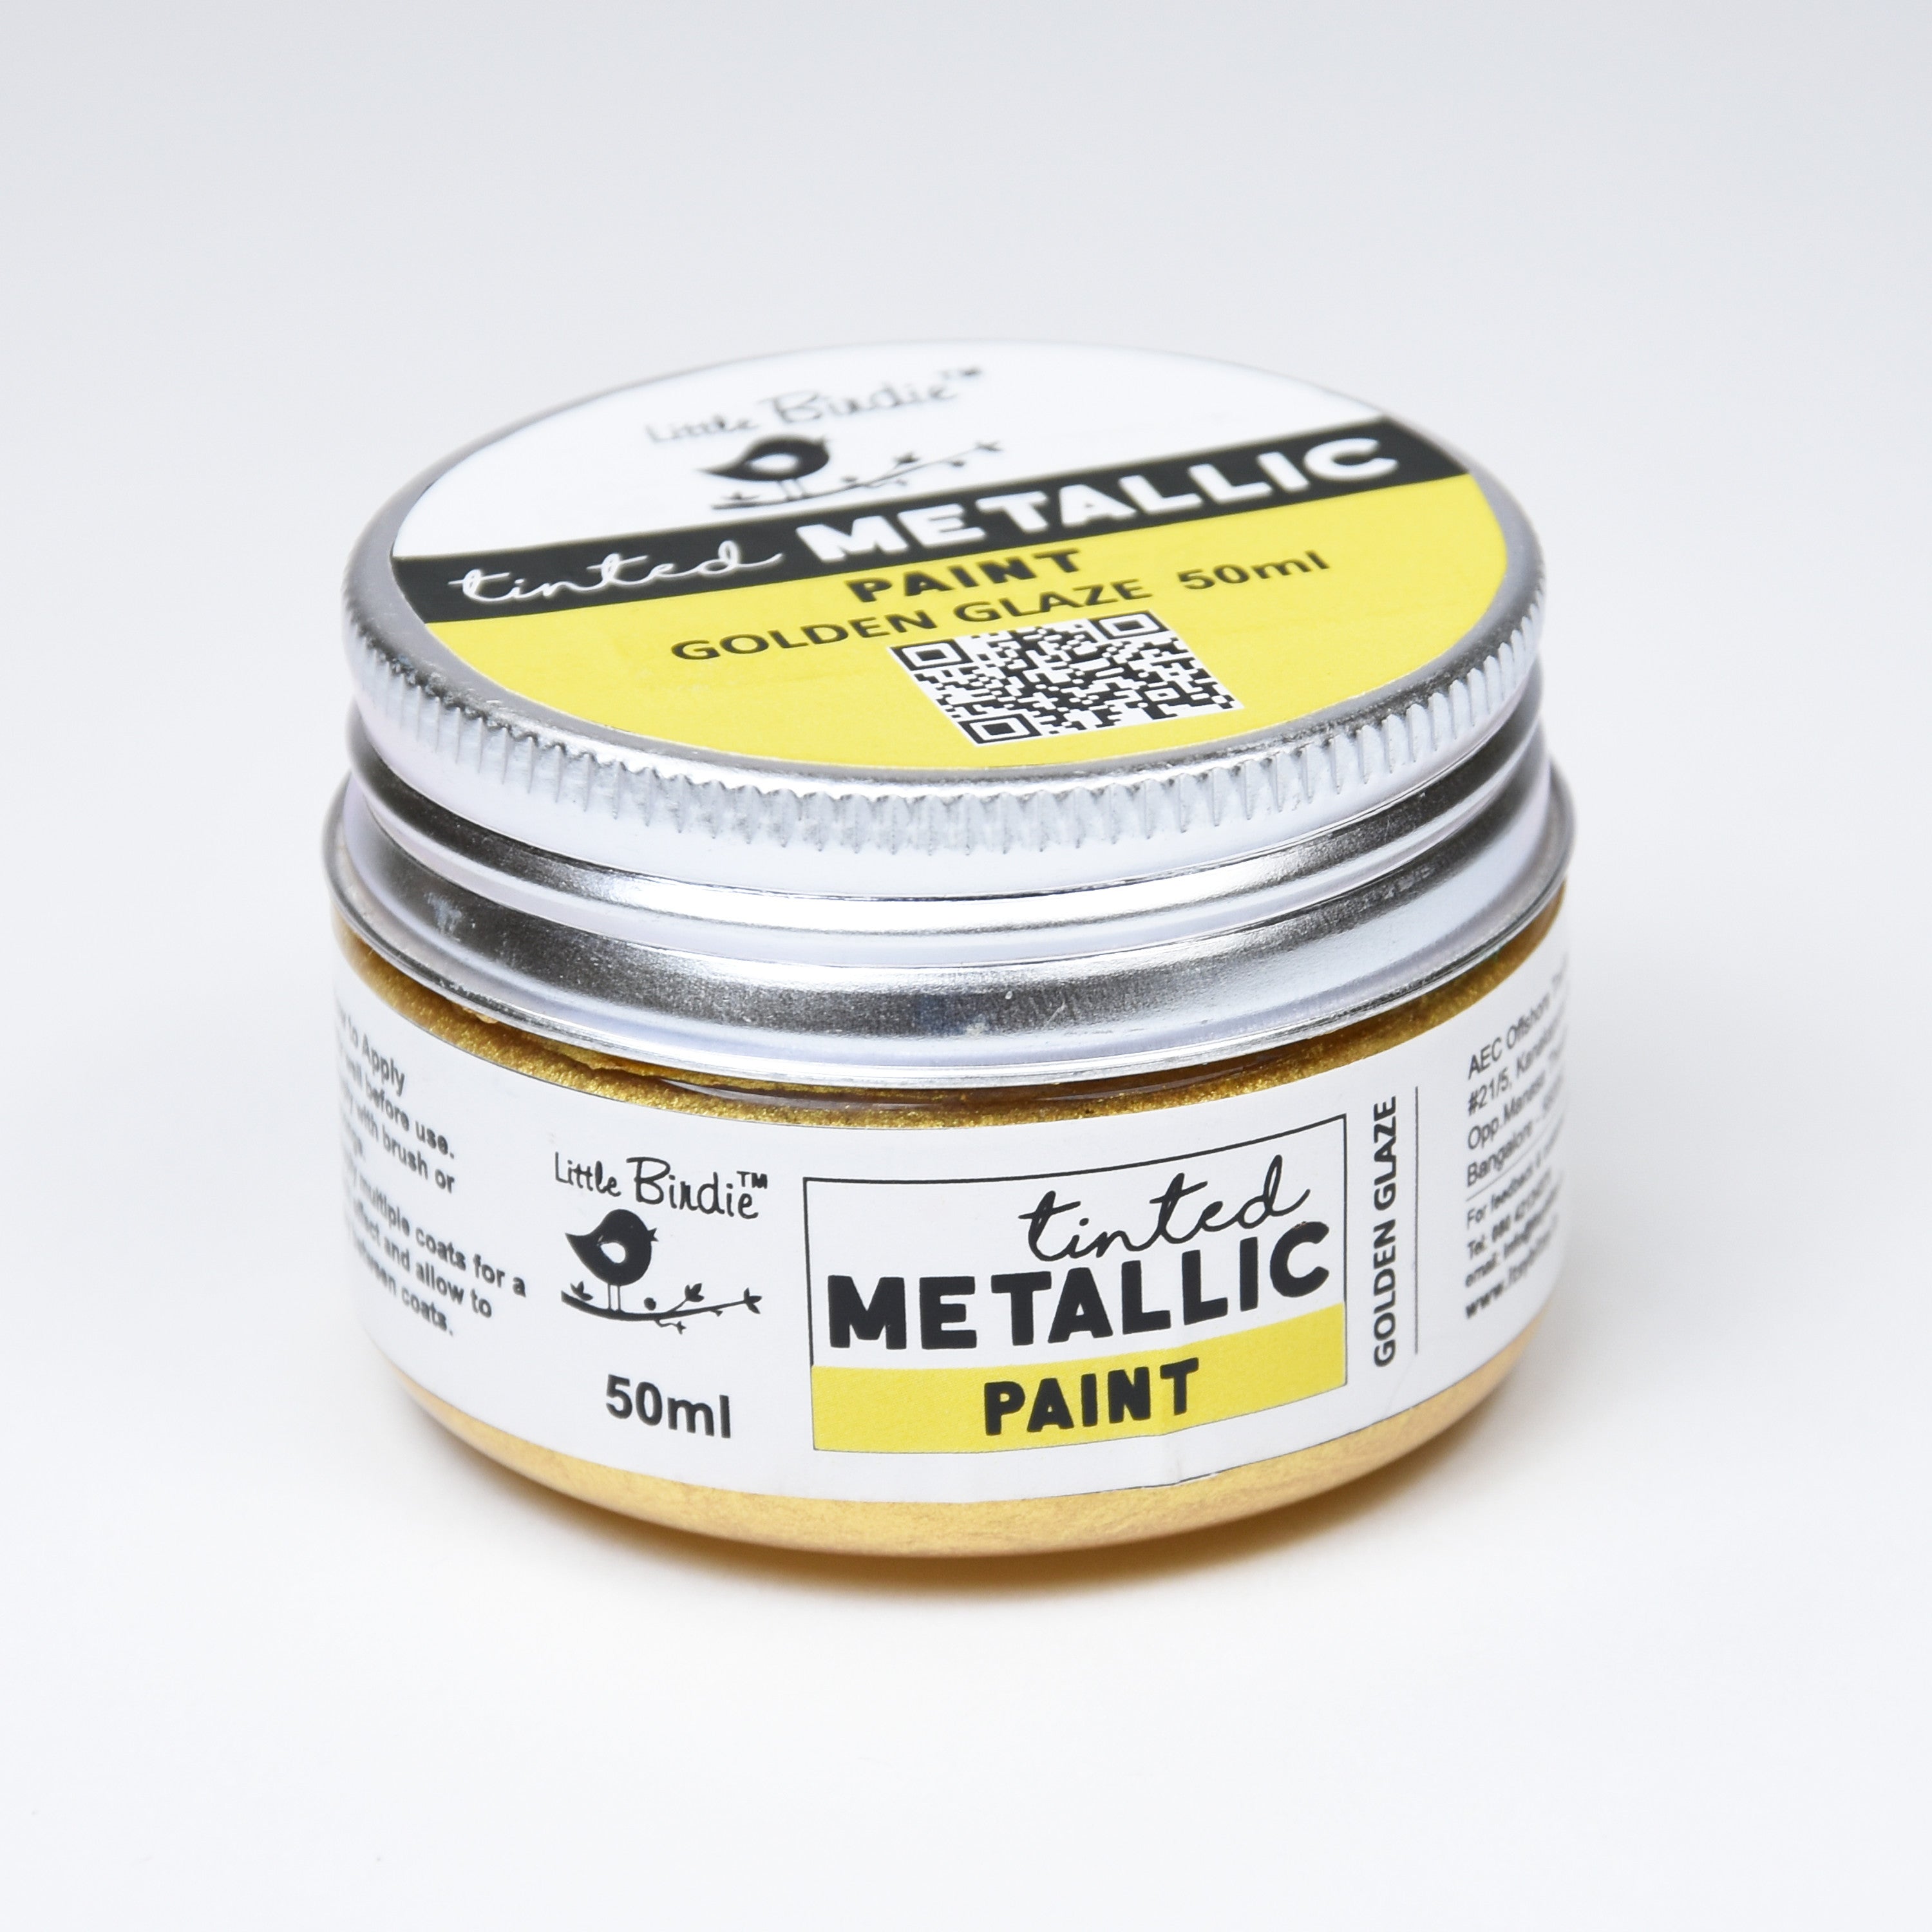 Tinted Metallic Paint Golden Glaze 50Ml Bottle Lb - VC